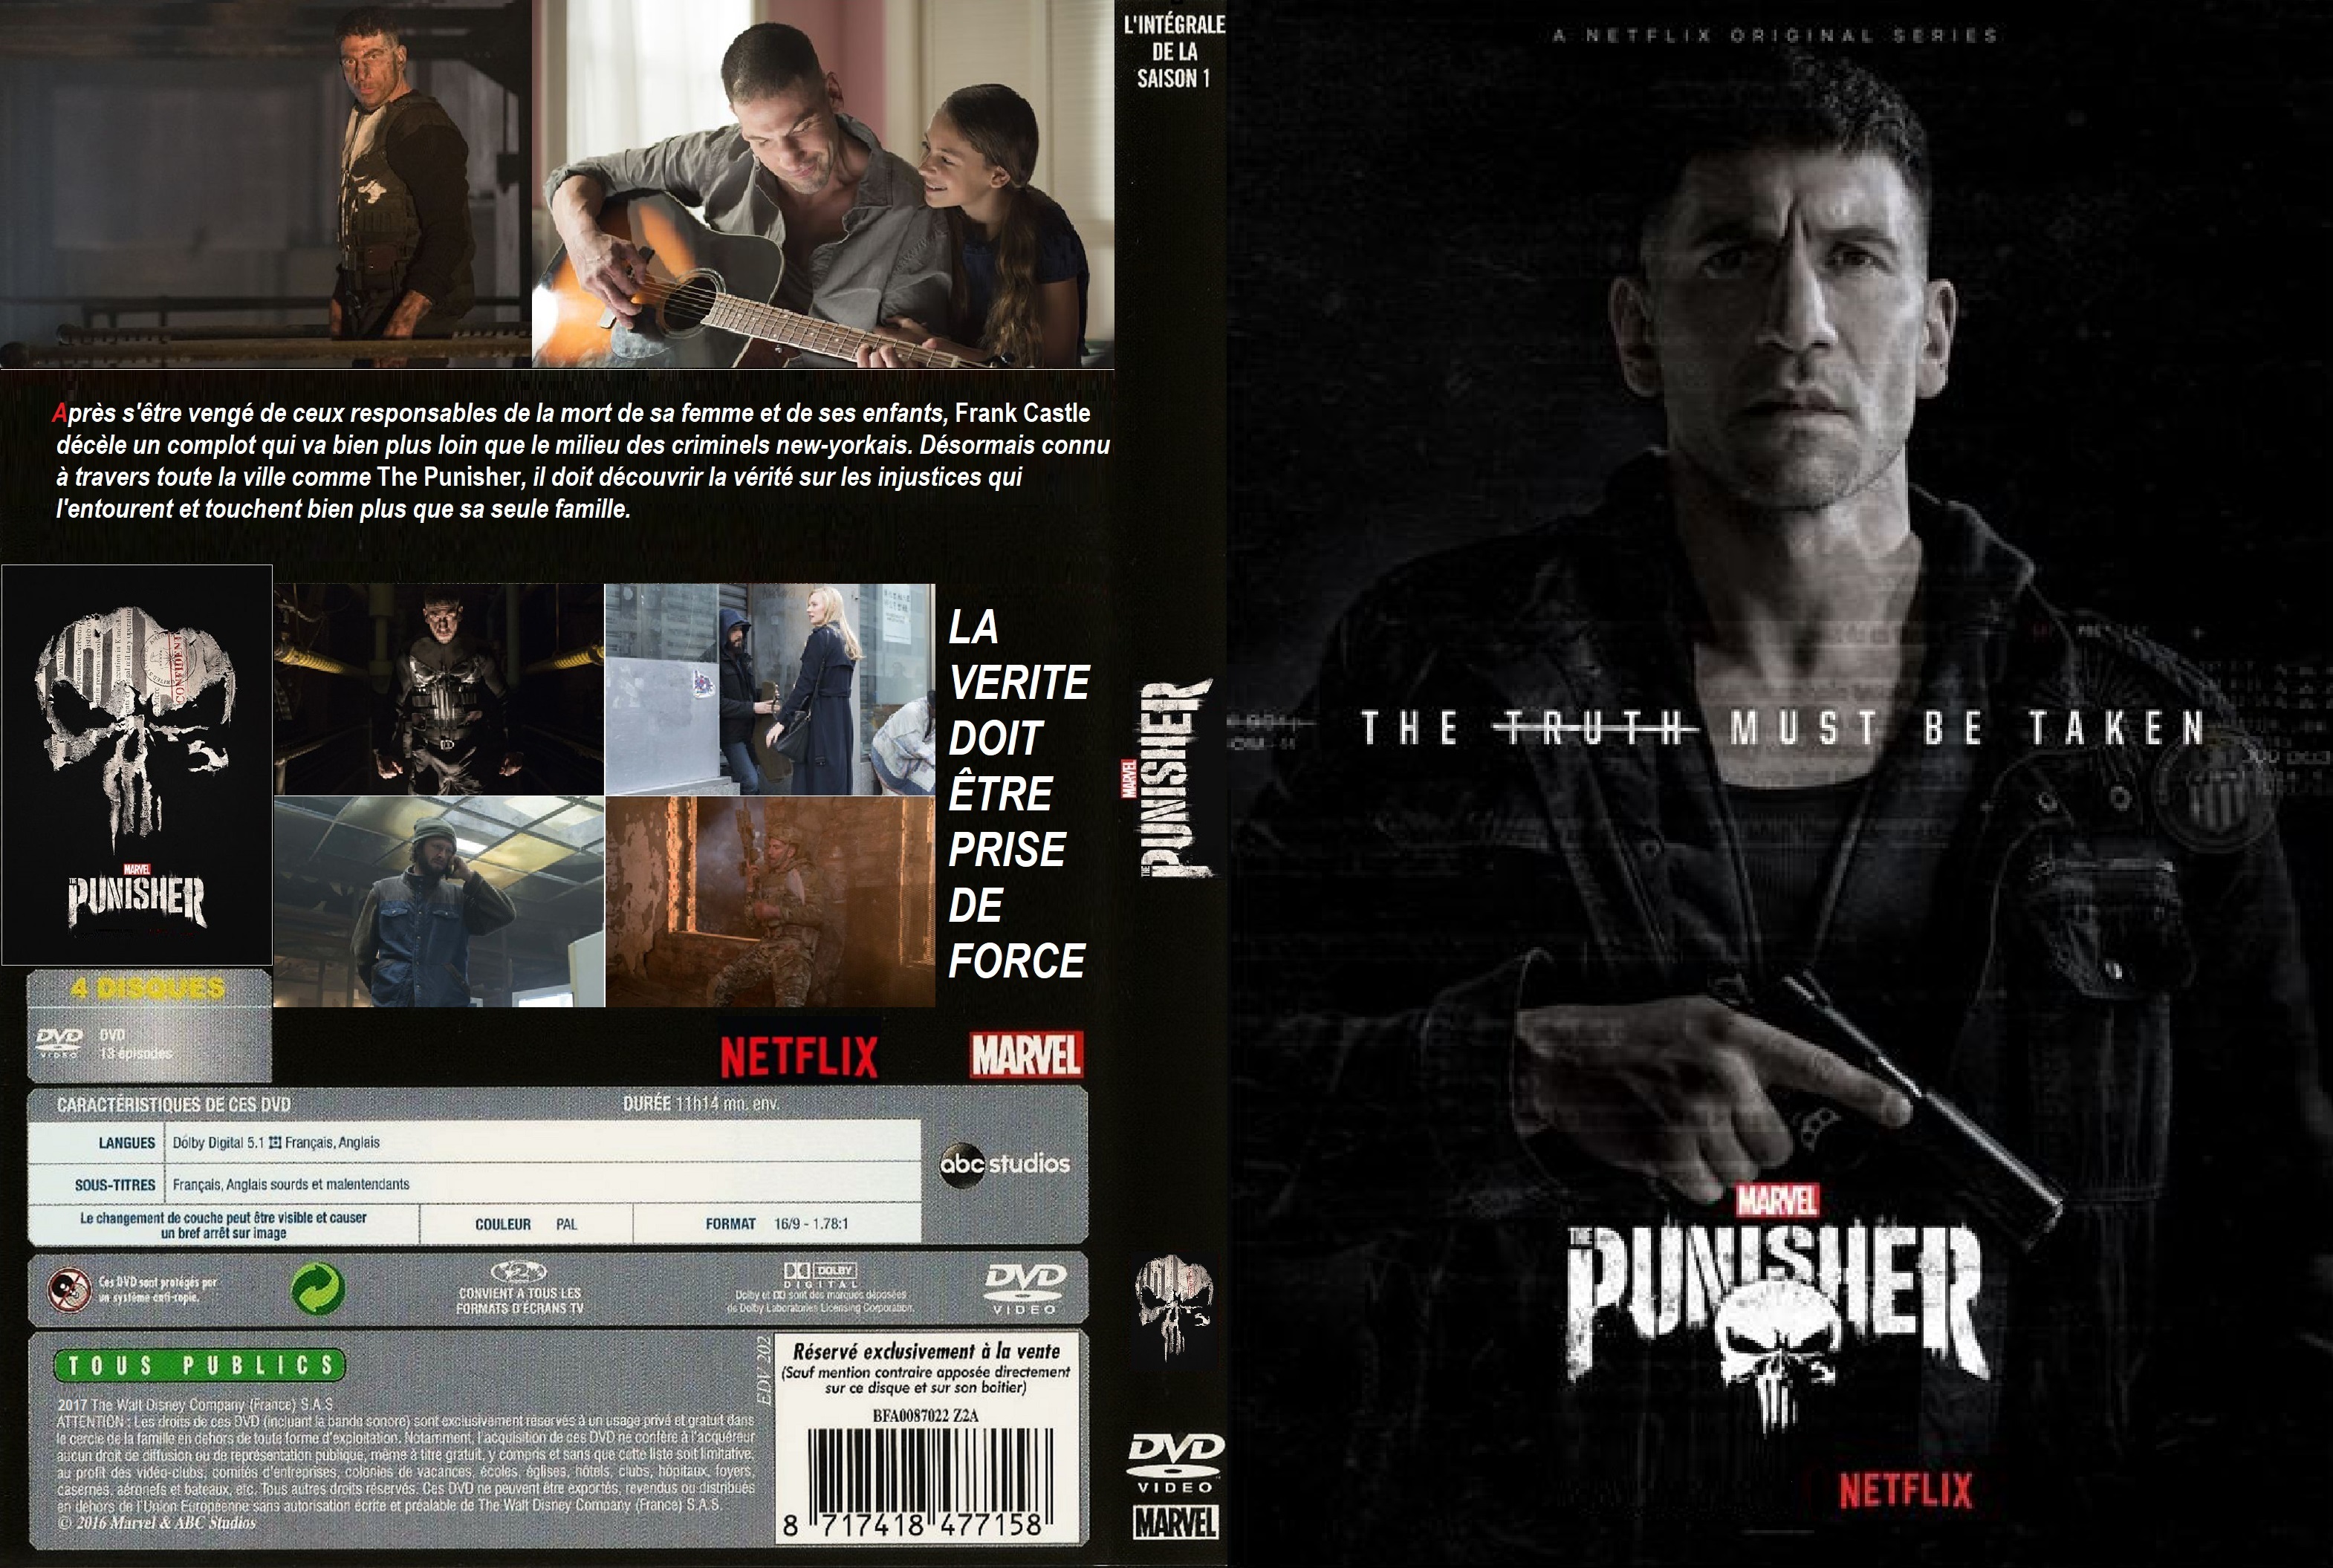 Jaquette DVD The Punisher saison 1 custom